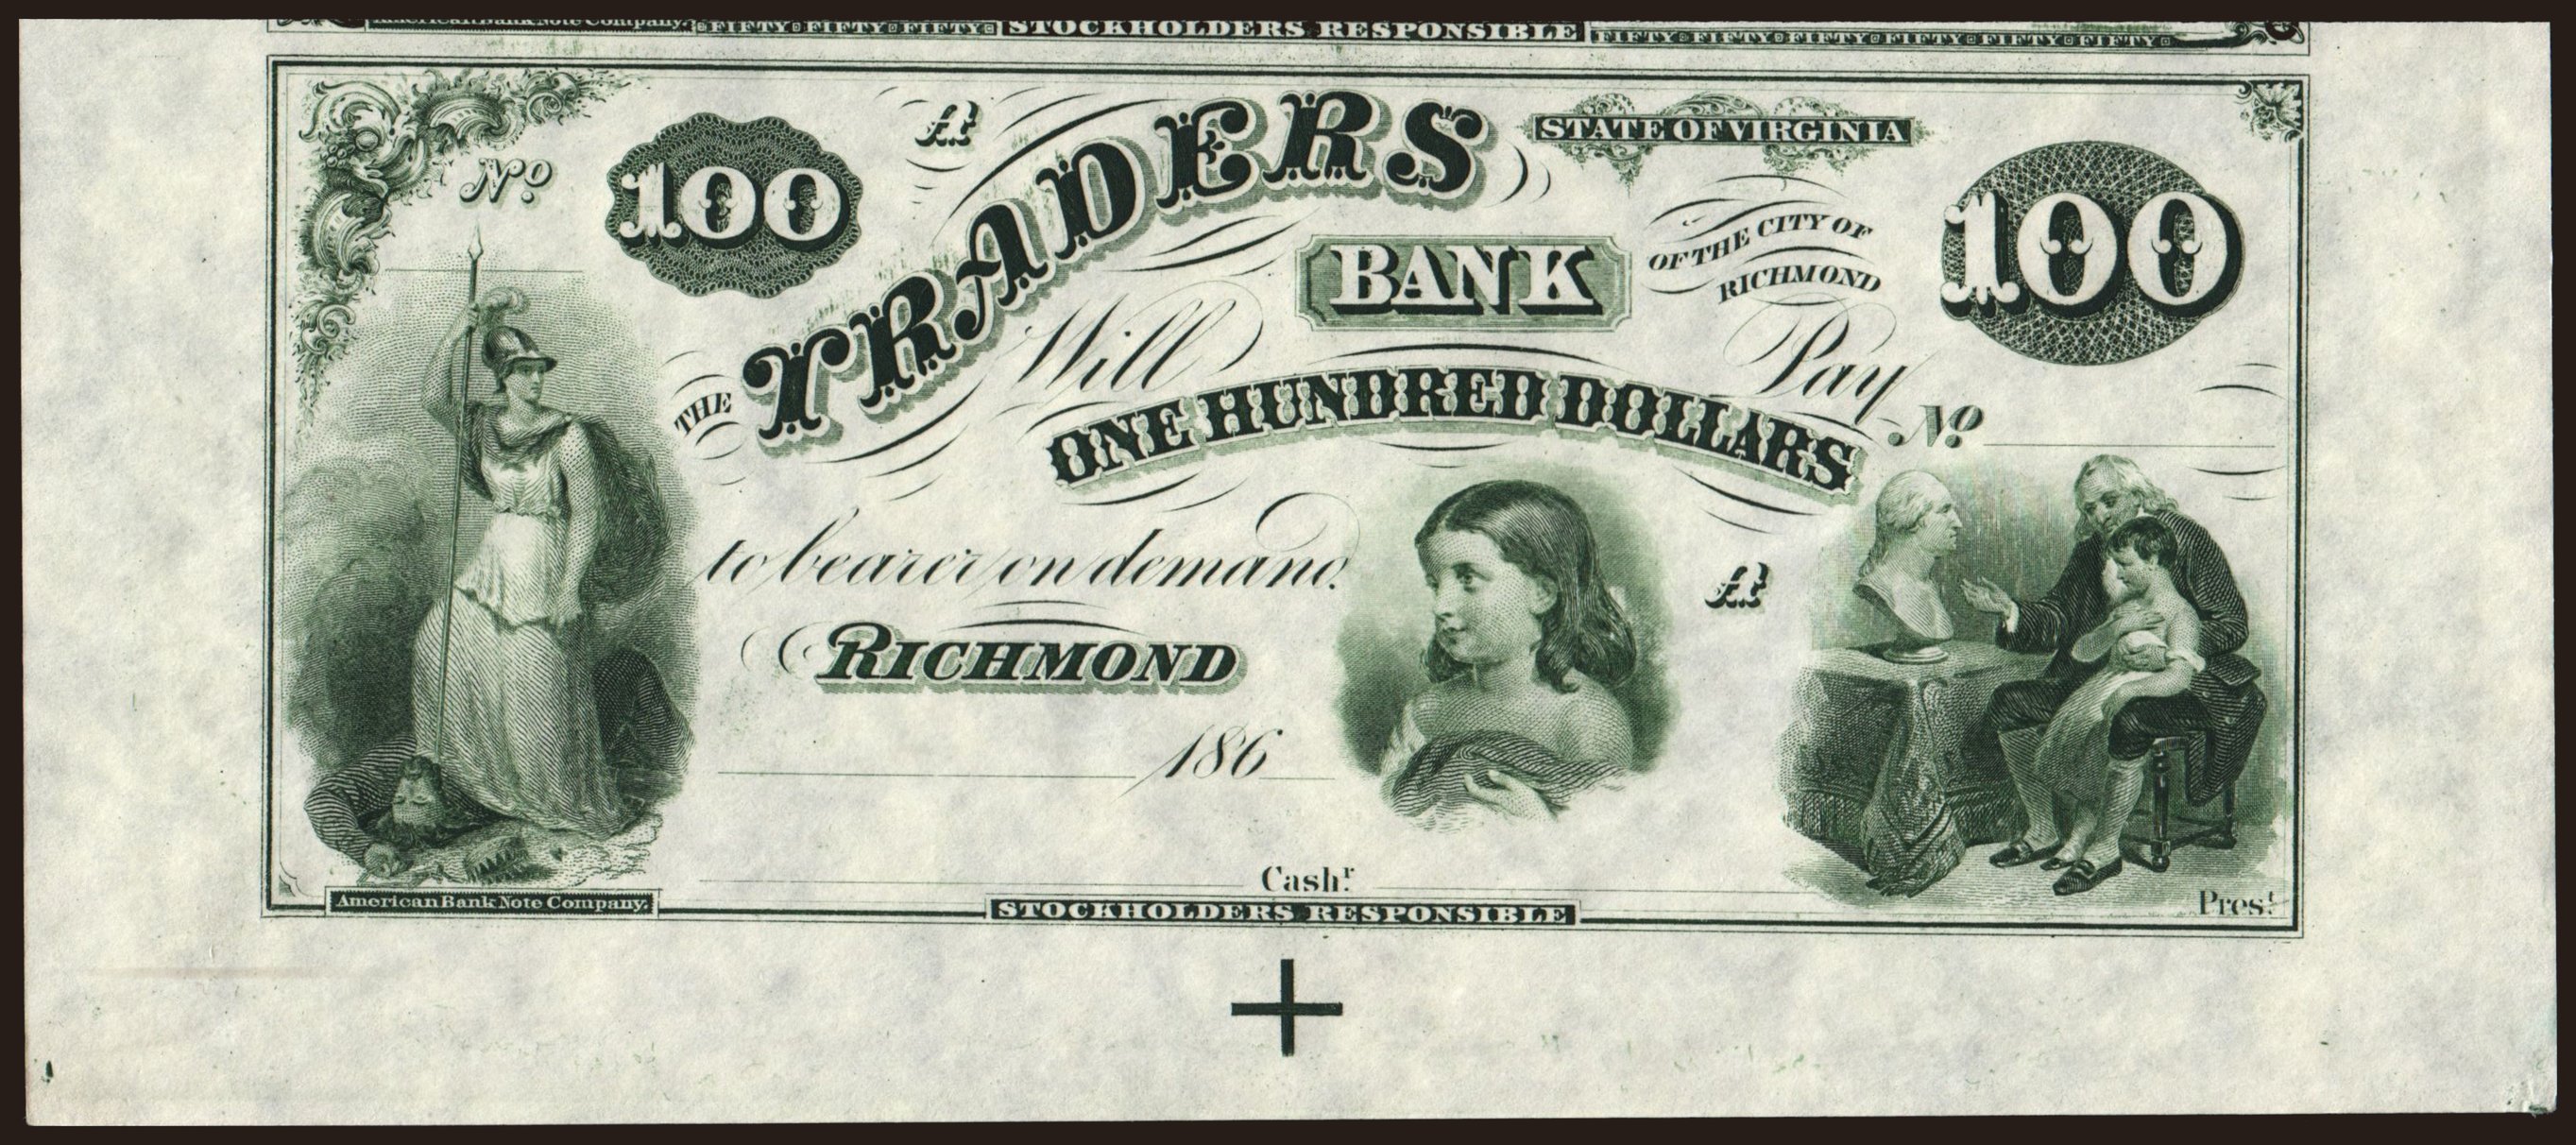 Richmond/ Traders Bank, 100 dollars, 186x